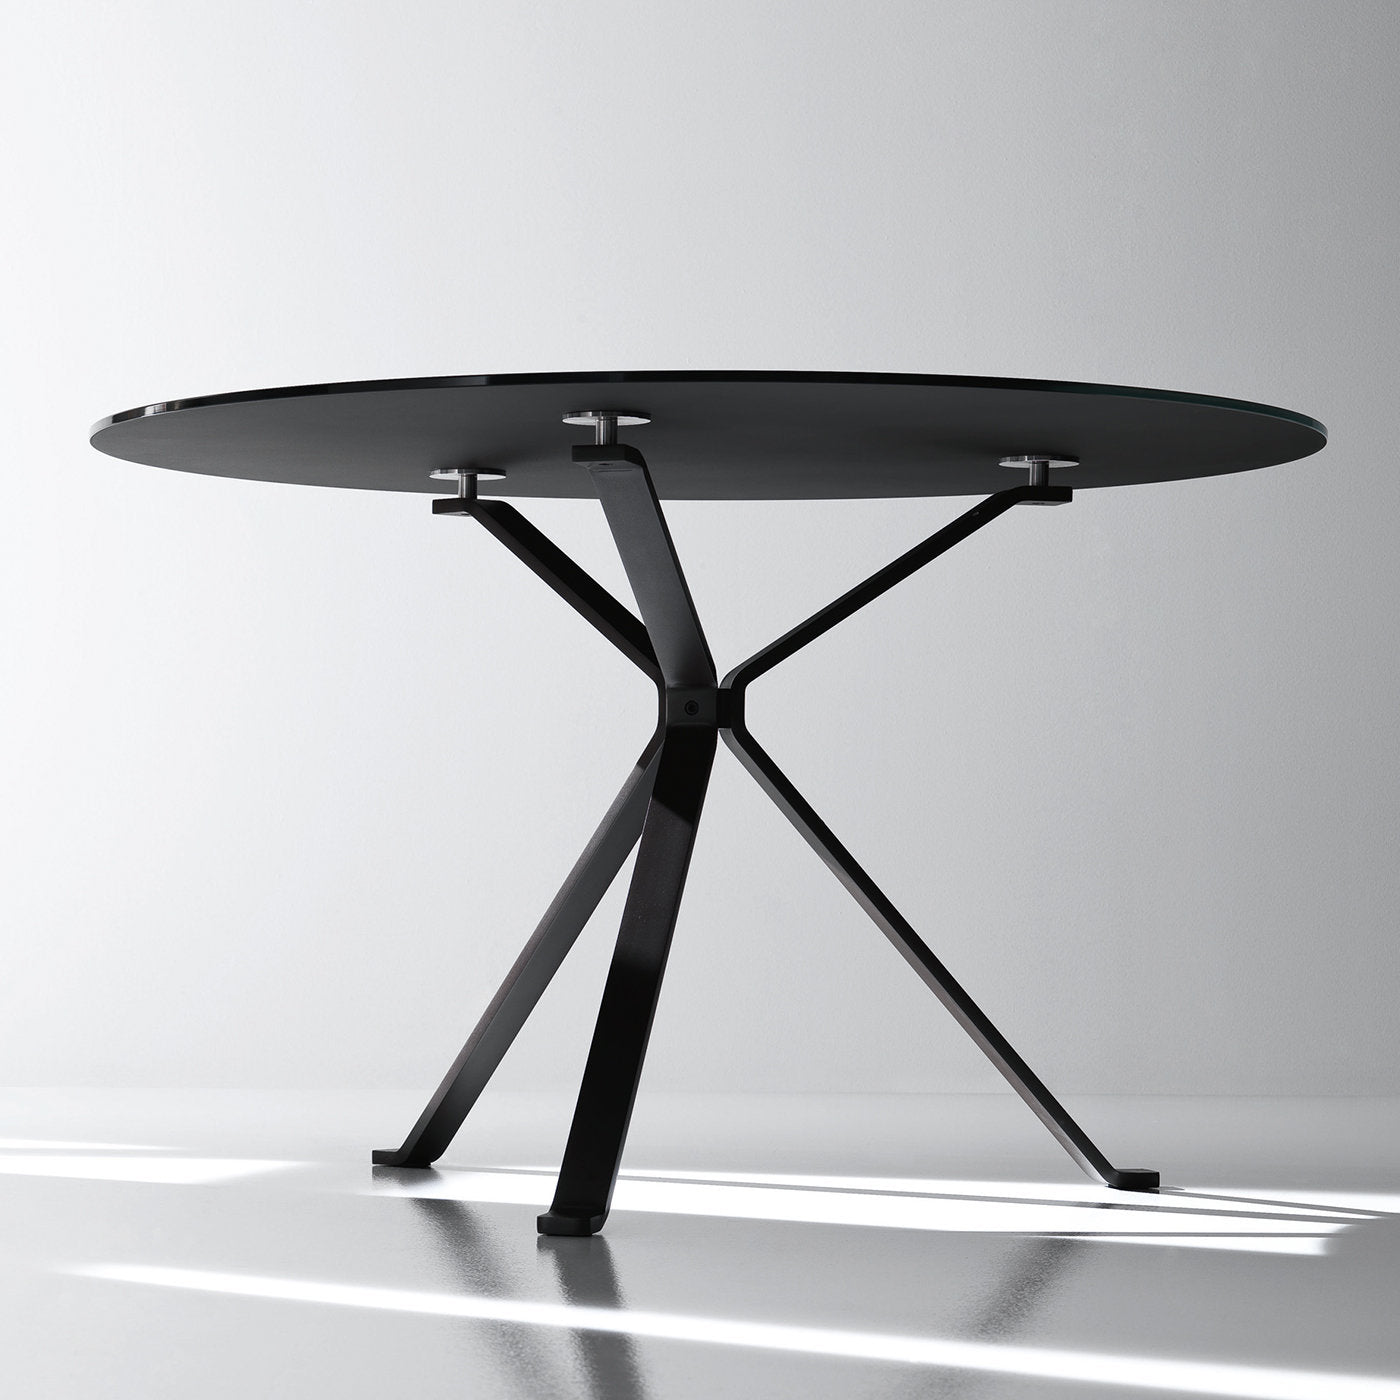 Revo Black 120 Coffee Table by Giovanni Giacobone + Massimo Roj Progetto CMR - Alternative view 1